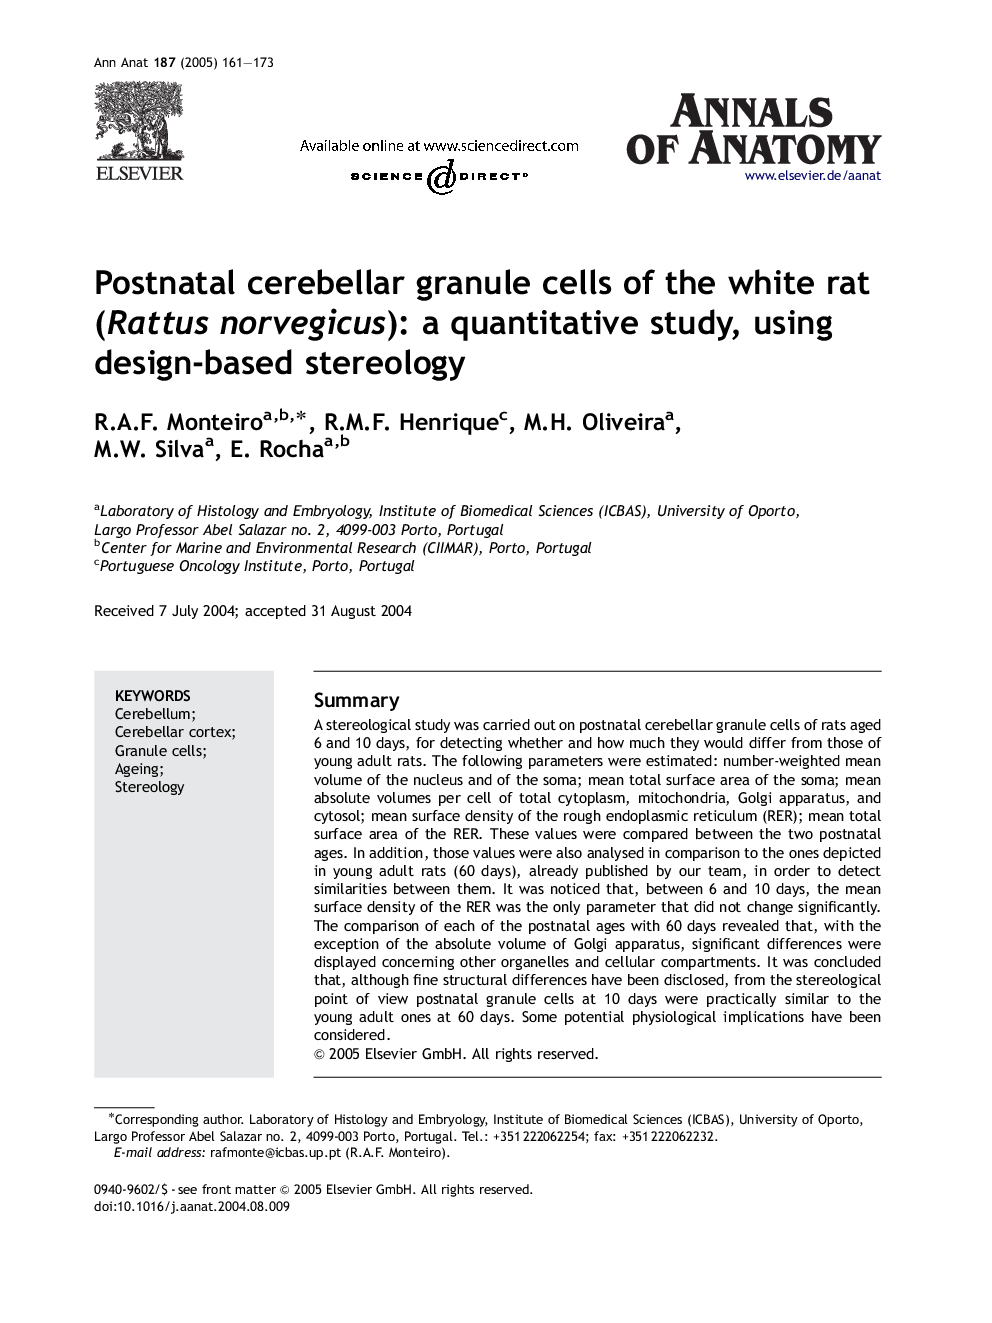 Postnatal cerebellar granule cells of the white rat (Rattus norvegicus): a quantitative study, using design-based stereology